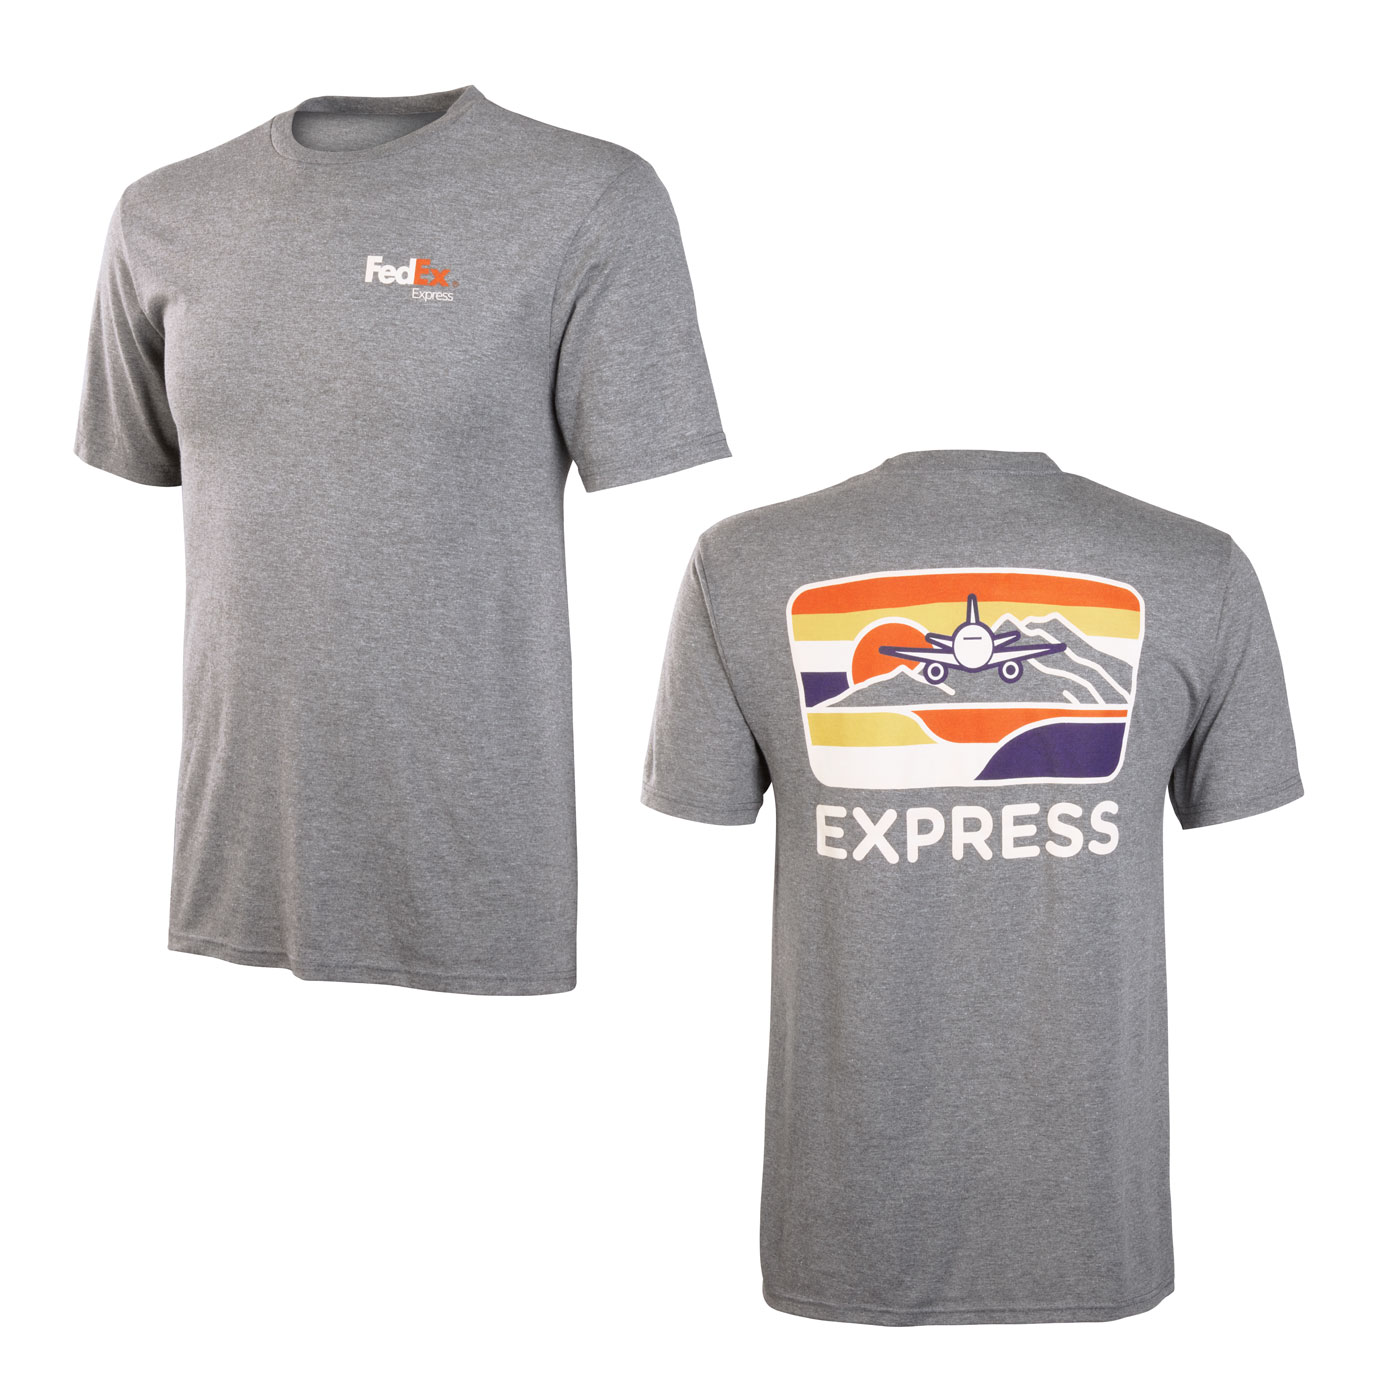 Algebraisk lejlighed Serrated FedEx Express Graphic T-shirt | The FedEx Company Store